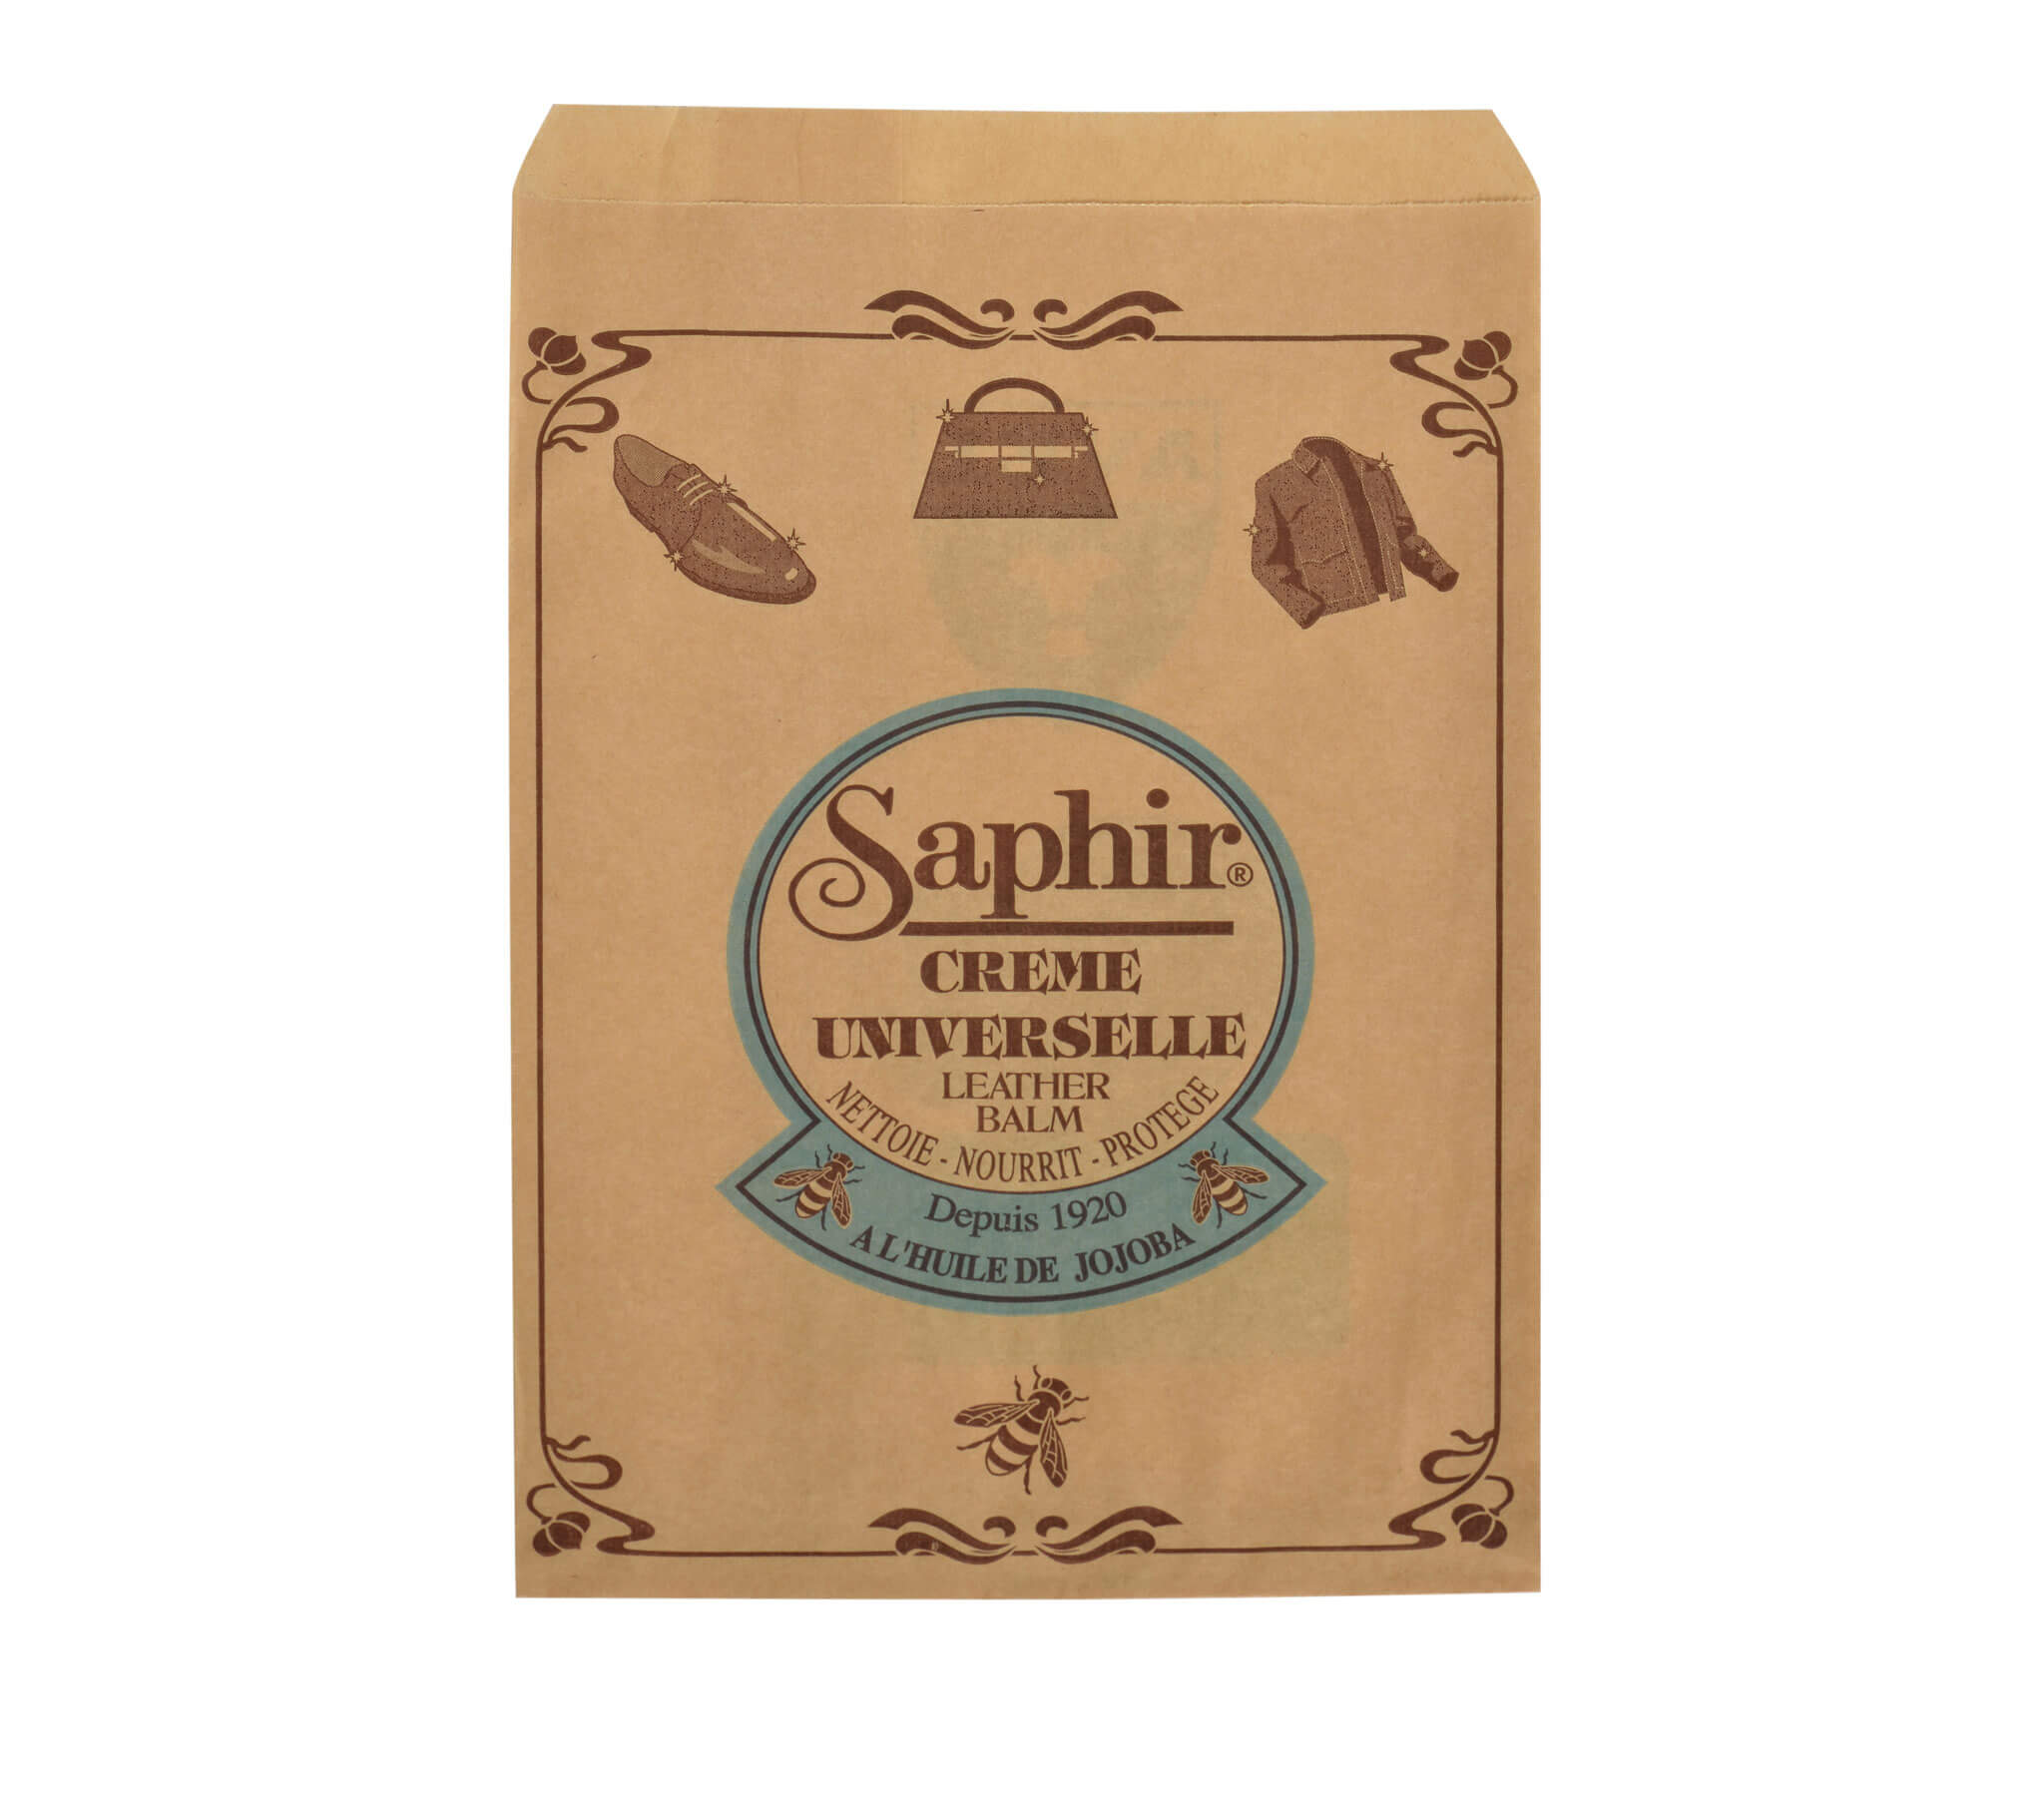 Saphir Beaute du Cuir - Paper Bag